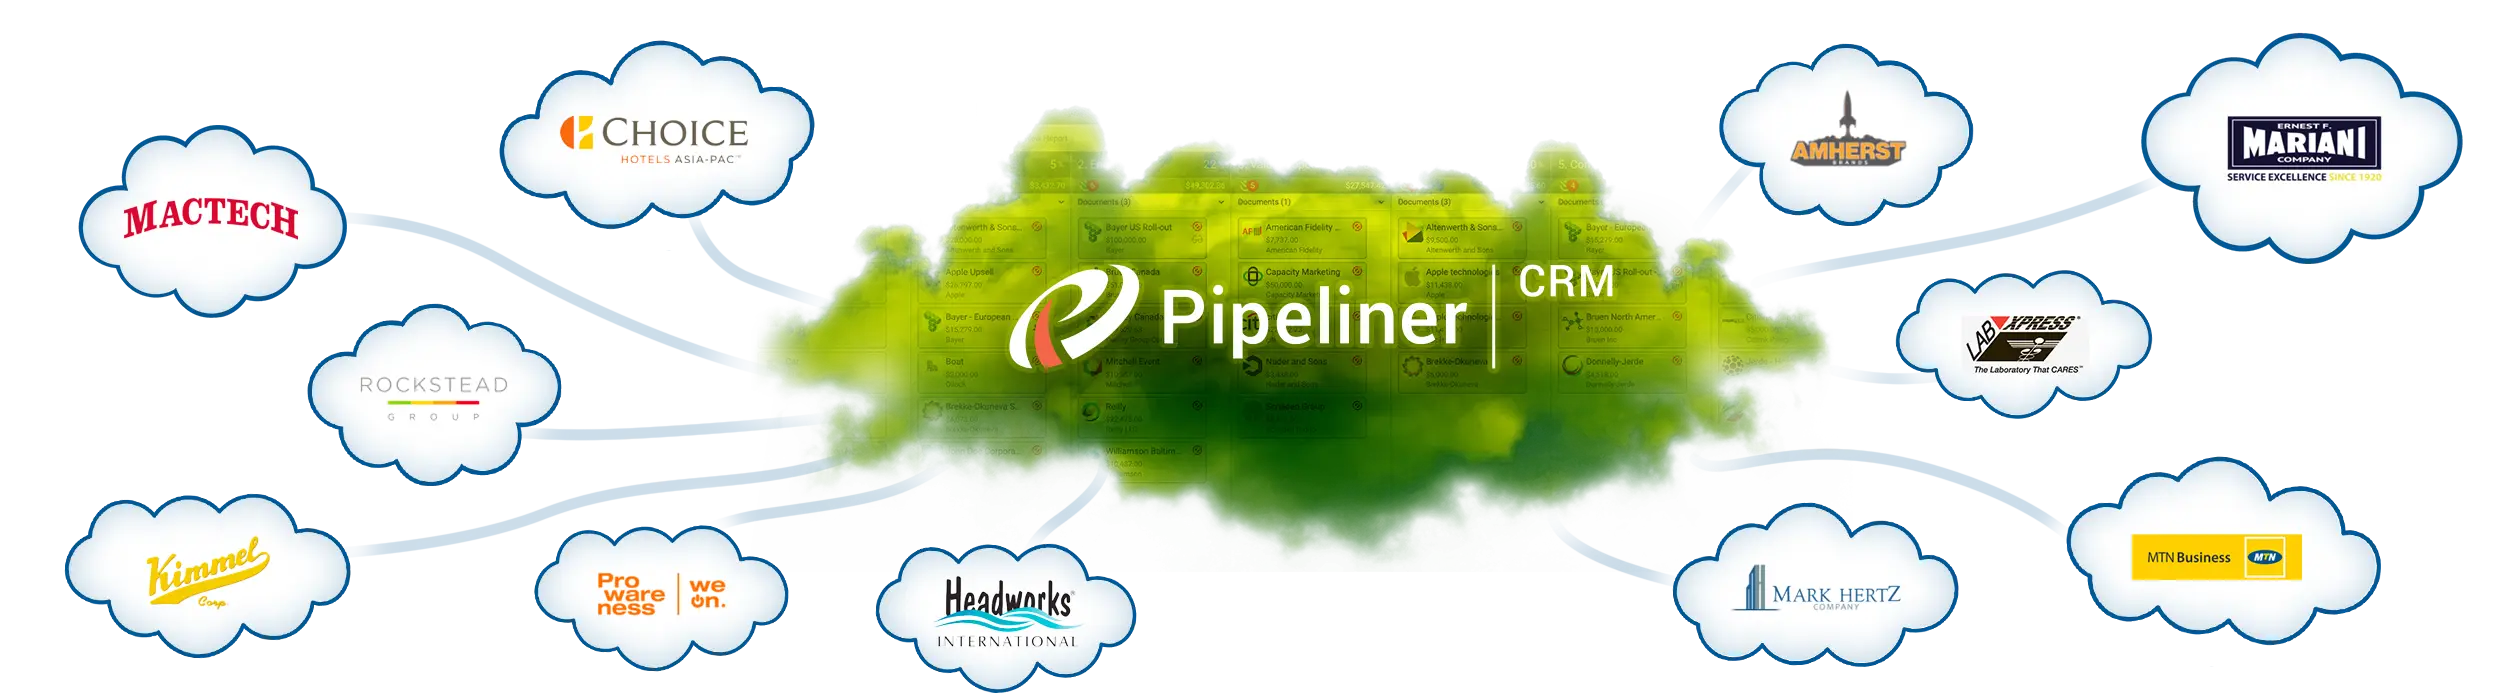 Pipeliner CRM customers